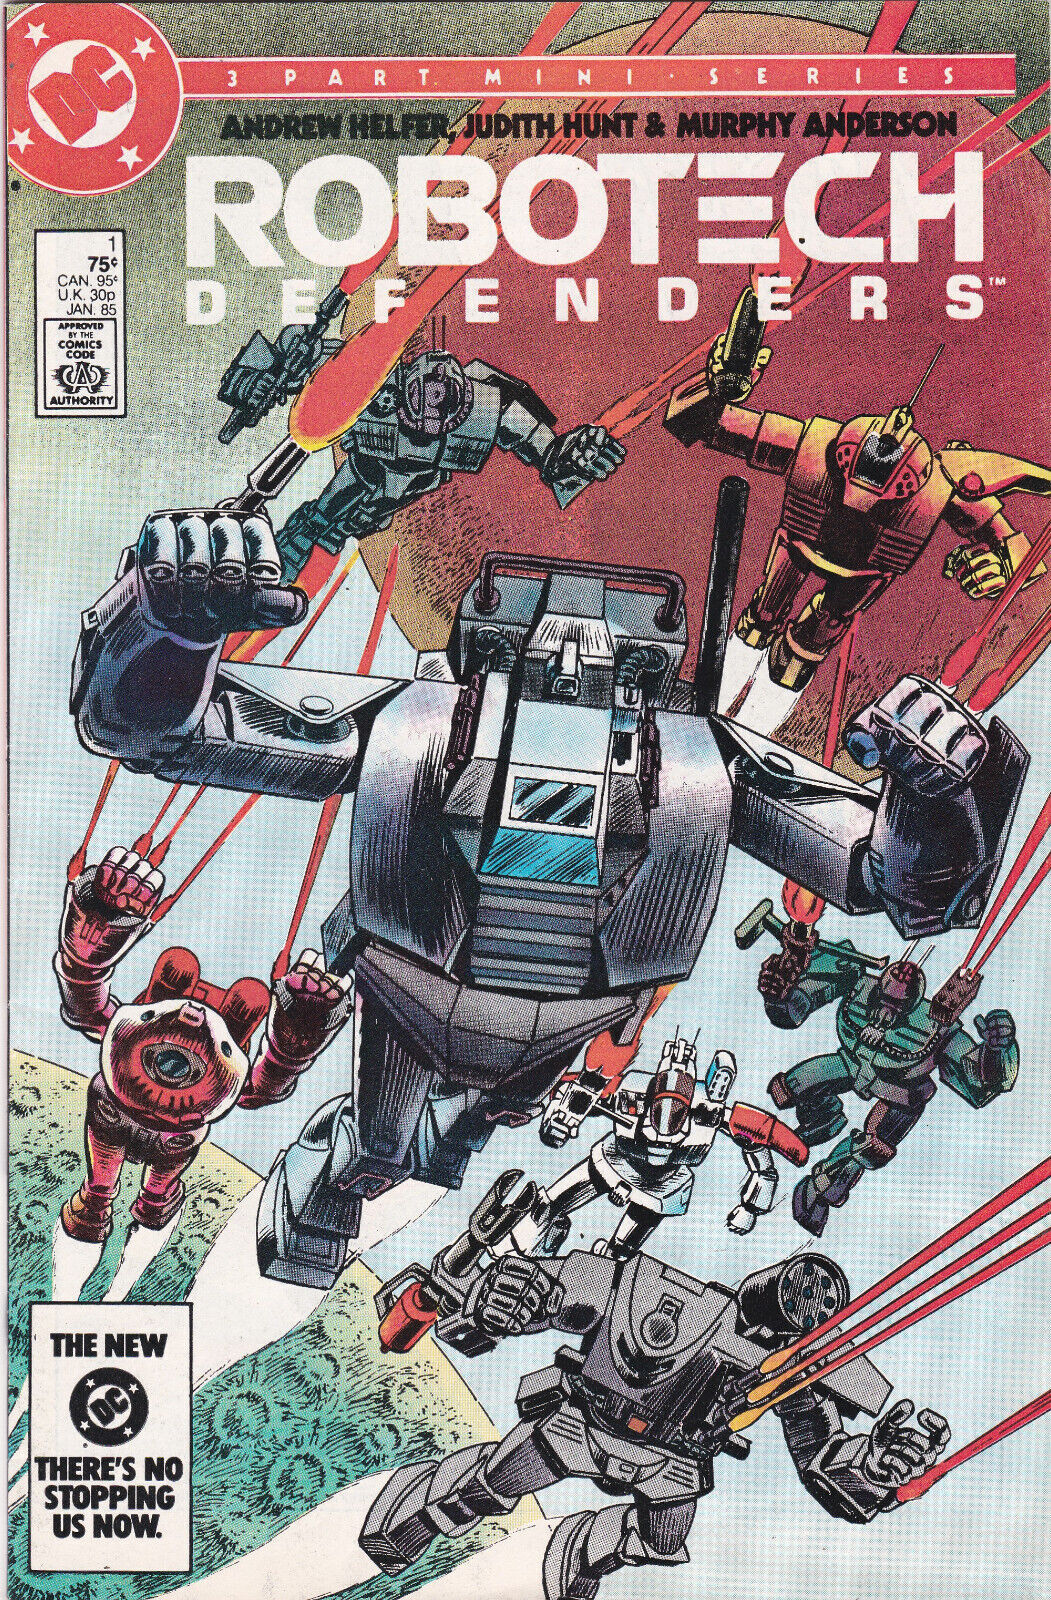 Robotech Defenders #1, Jan 1985, High Grade